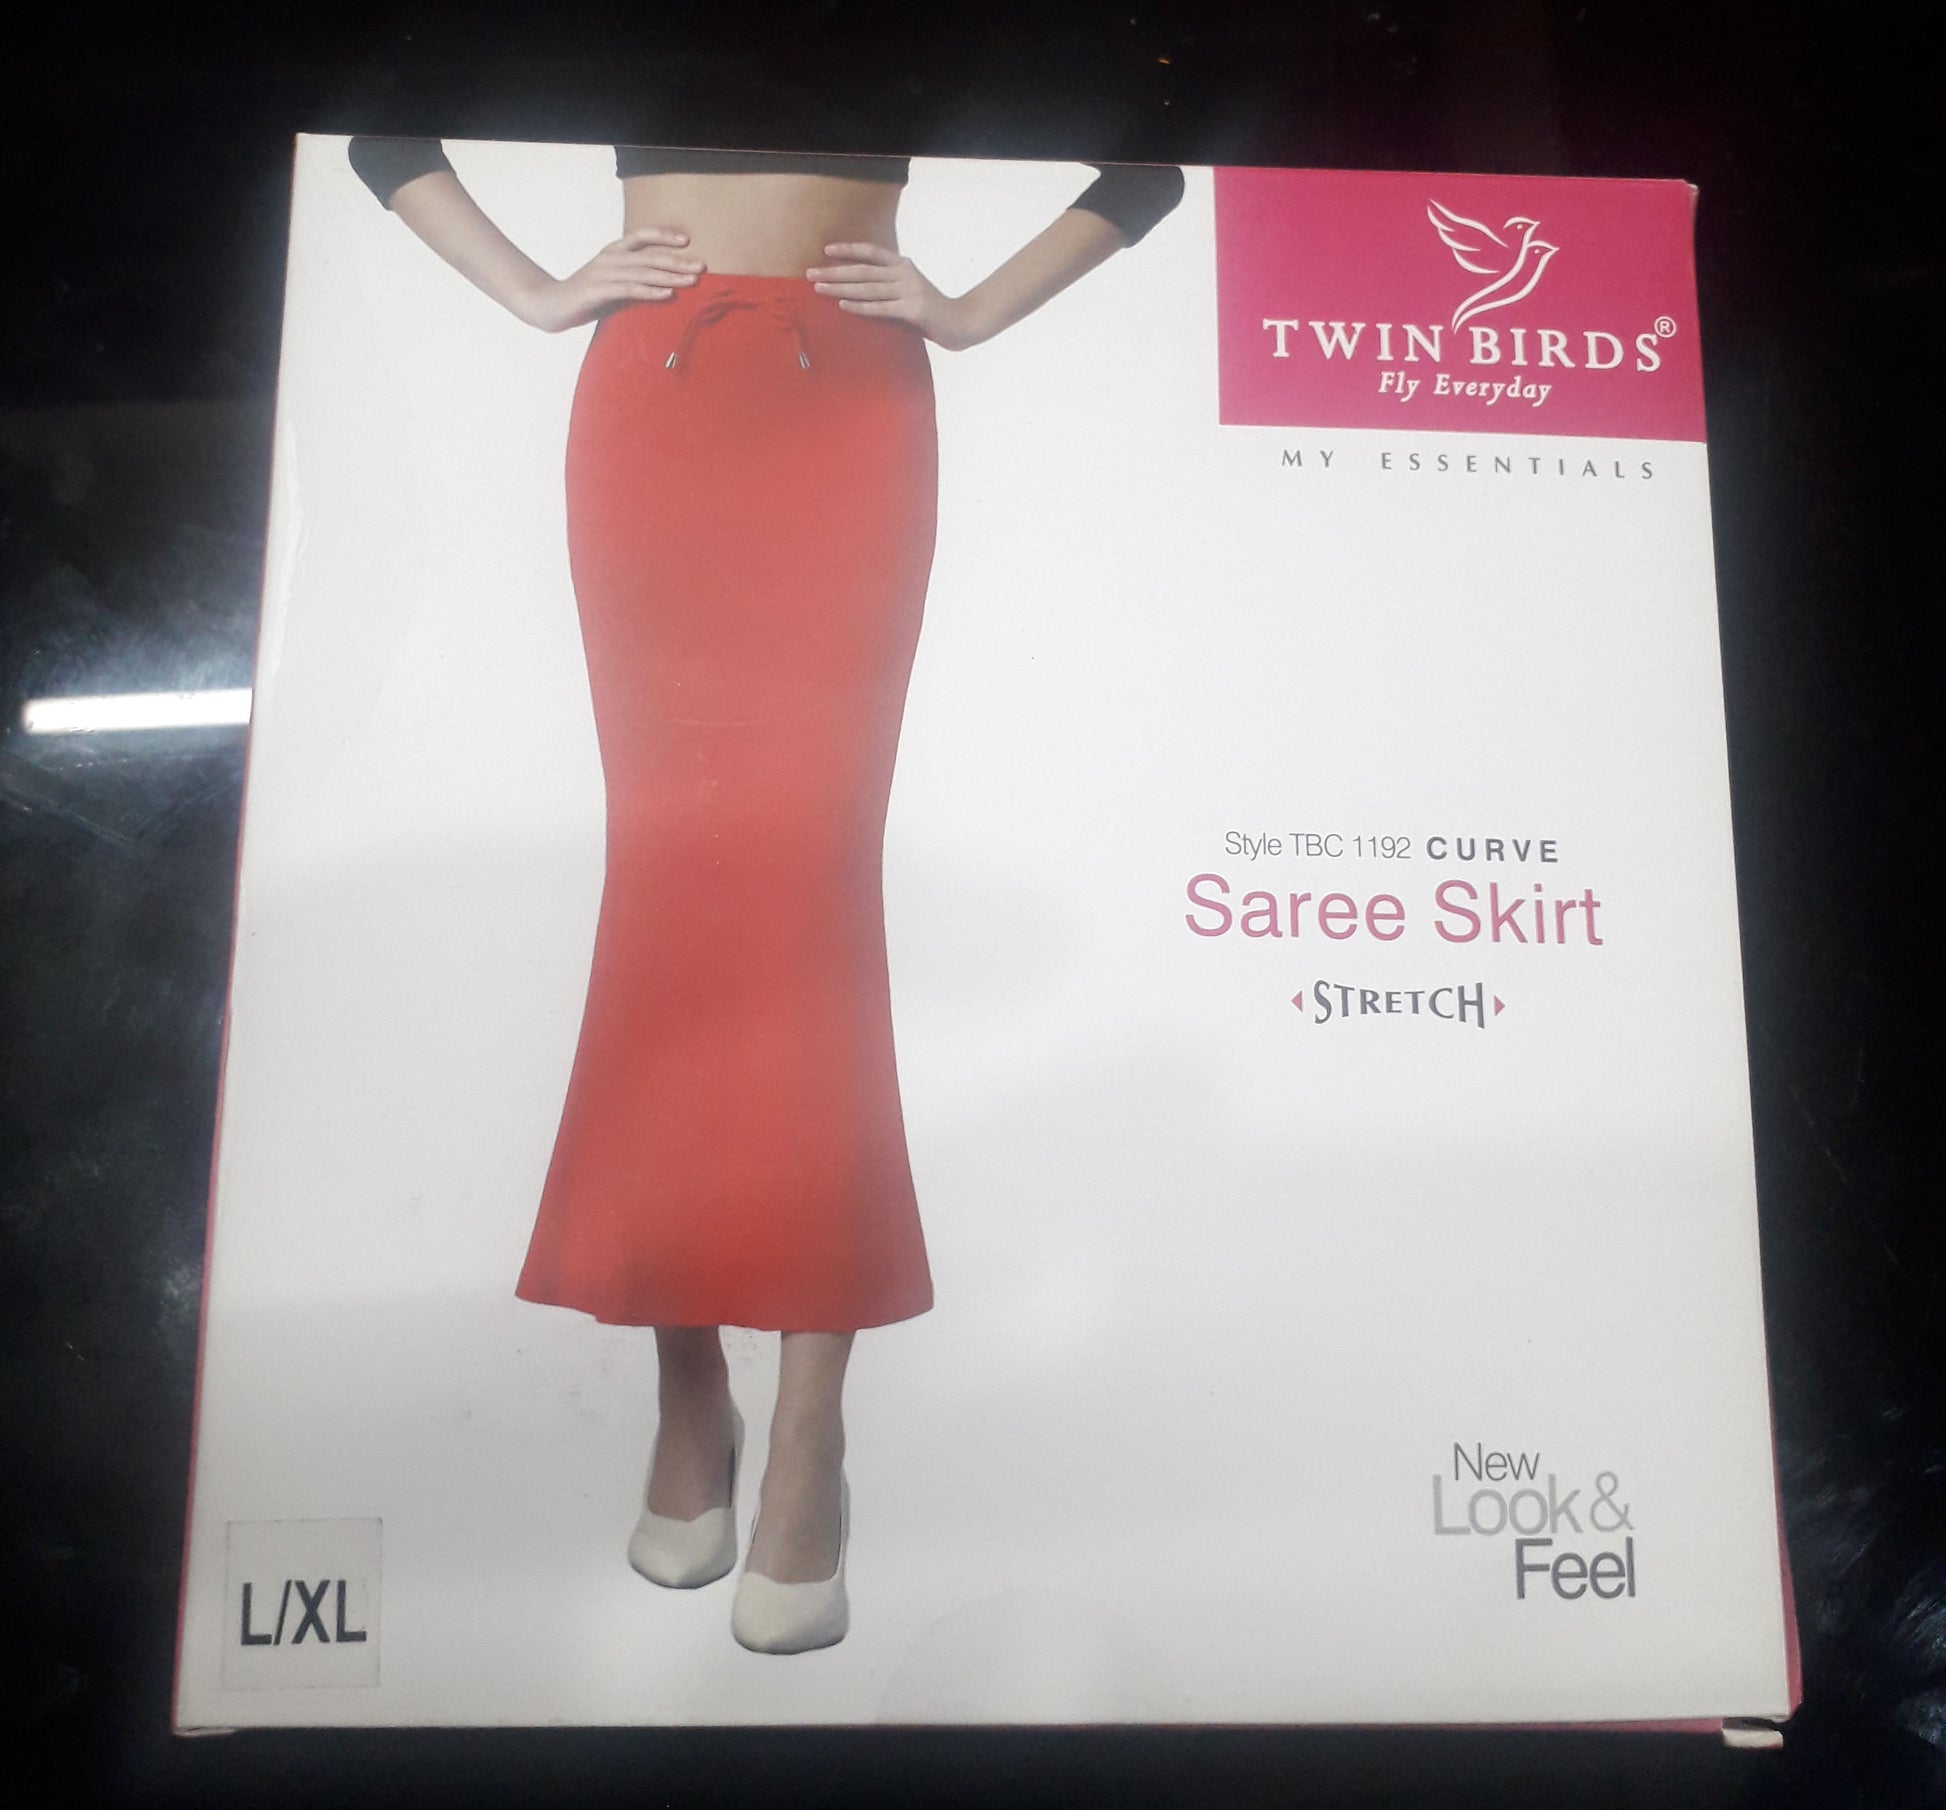 Twin Birds brand acrylic torque color saree shaper for women L-XL